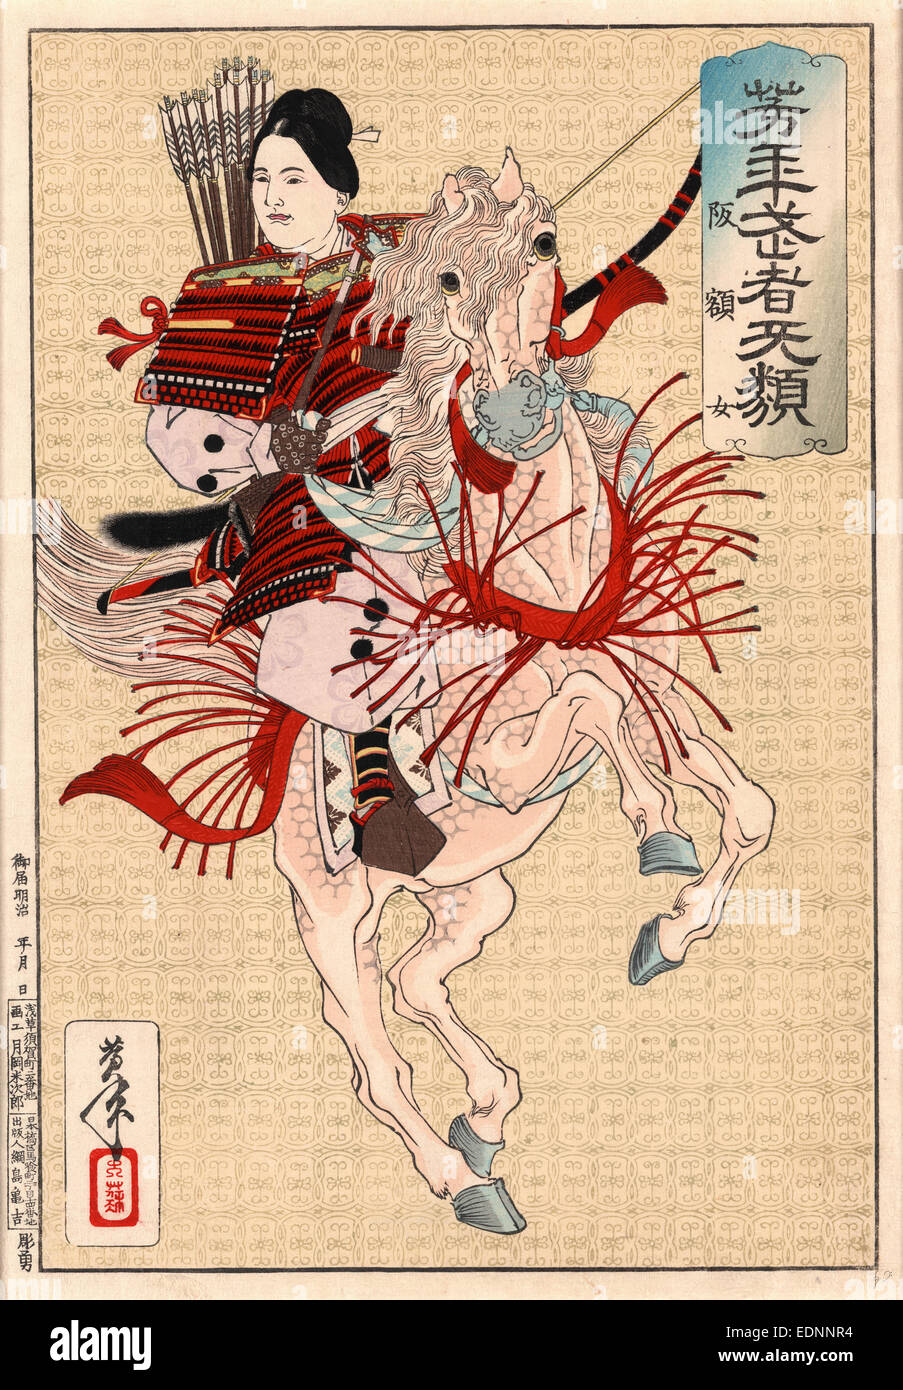 Hangakujo, The female warrior Hangaku., Taiso, Yoshitoshi, 1839-1892, artist, Japan : Tsunajima Kamekichi, [ca. 1885], 1 print : woodcut, color ; 37 x 25.3 cm., Han Gaku, historical woman warrior, armed and armored, seated on a rearing horse. Stock Photo